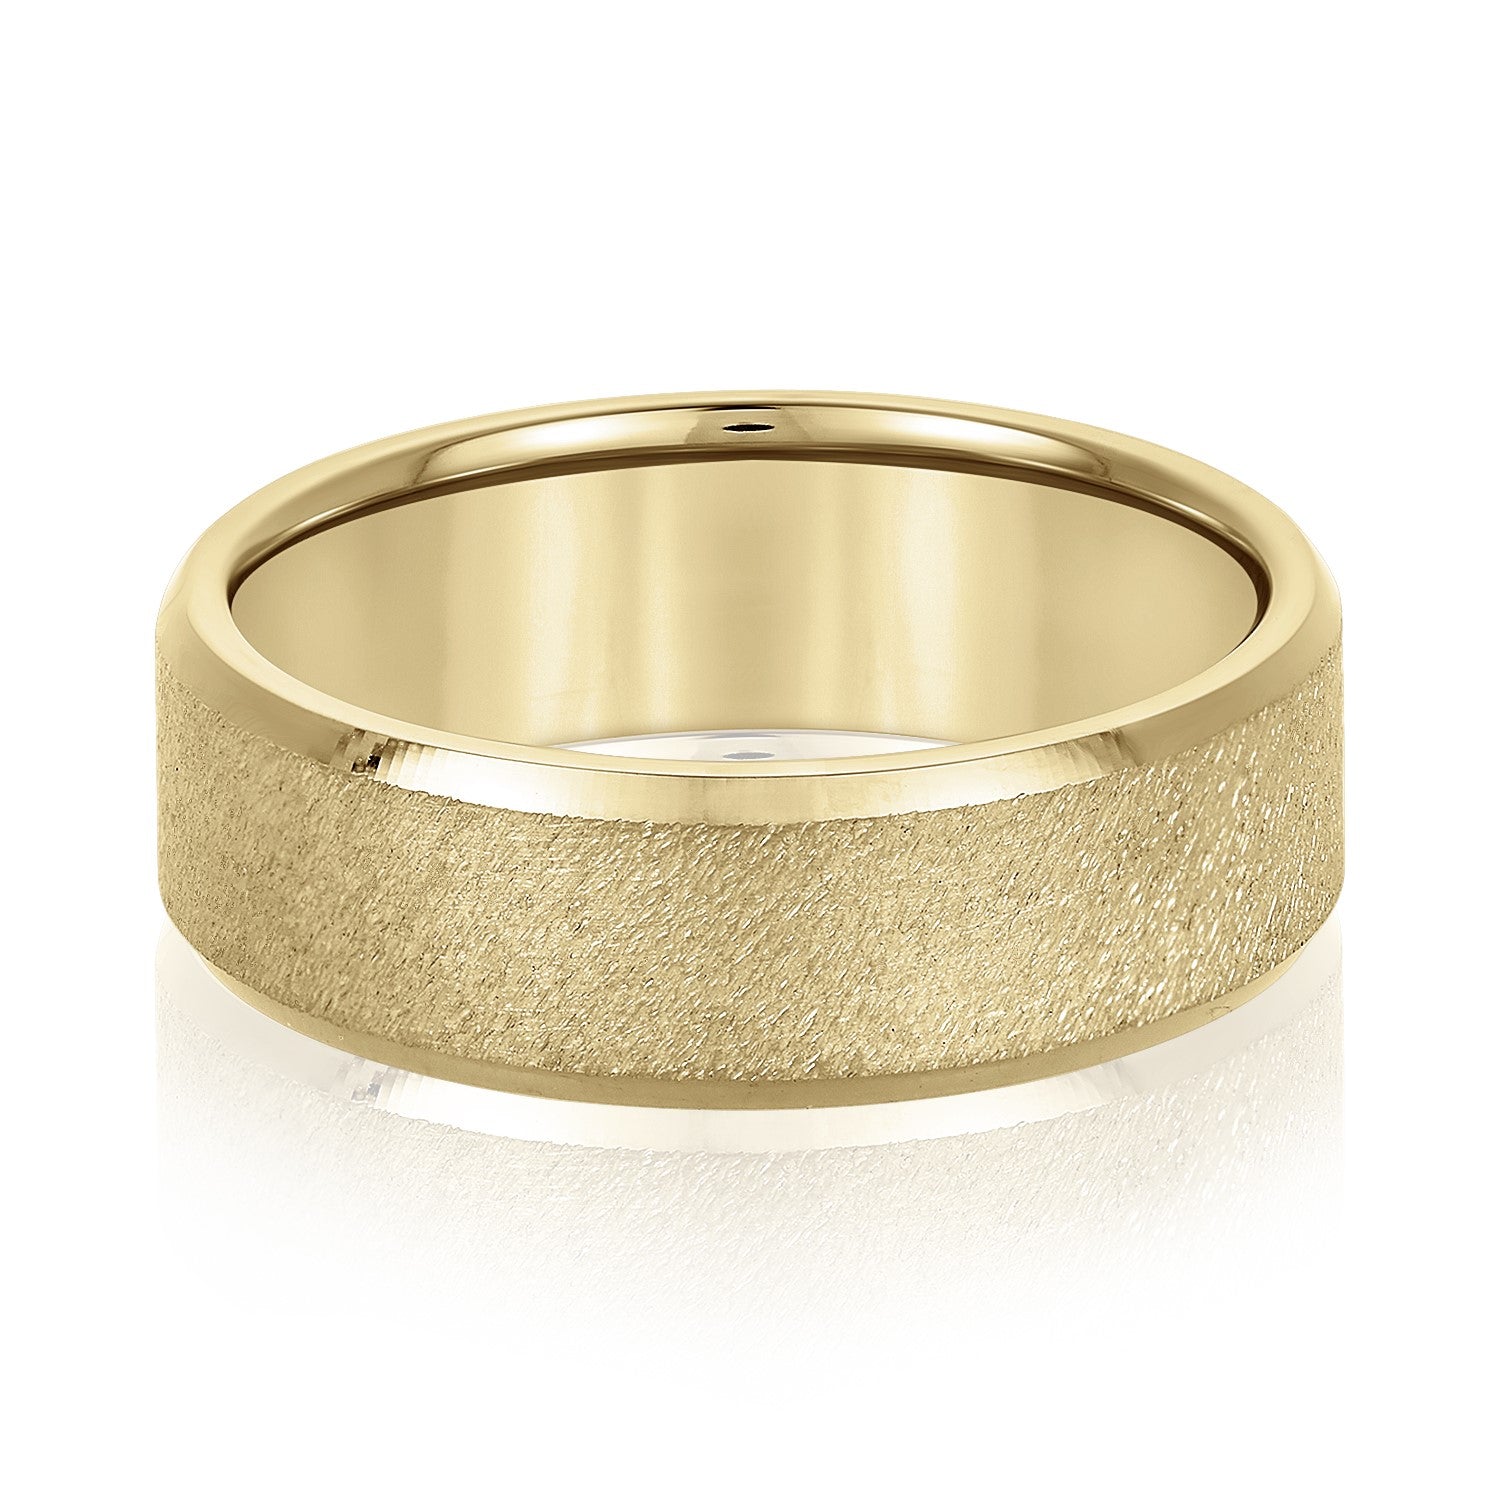 Men's Sandblasted Wedding Ring With High Polish Edges